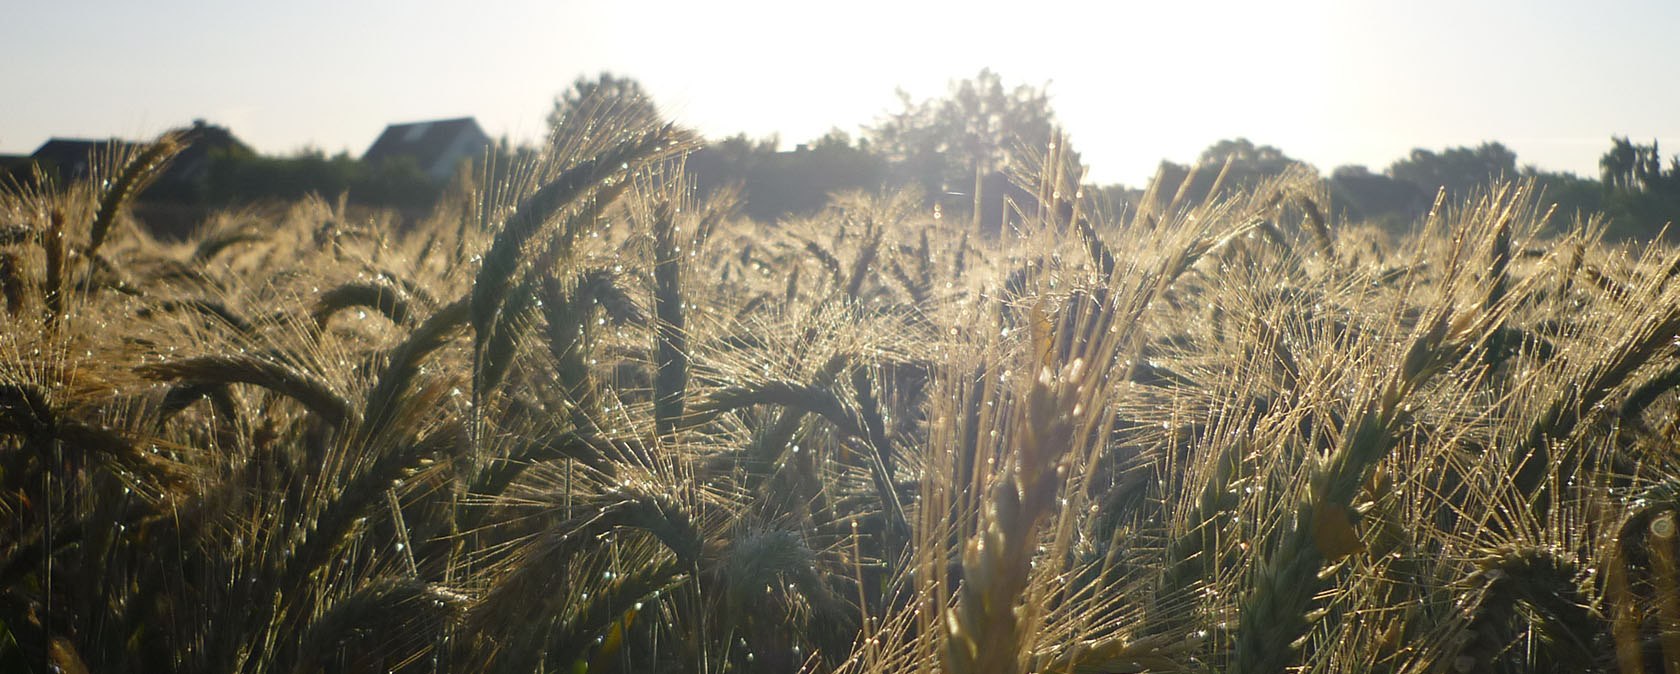 Getreidefeld auf der Genussroute, © Münsterland e.V.